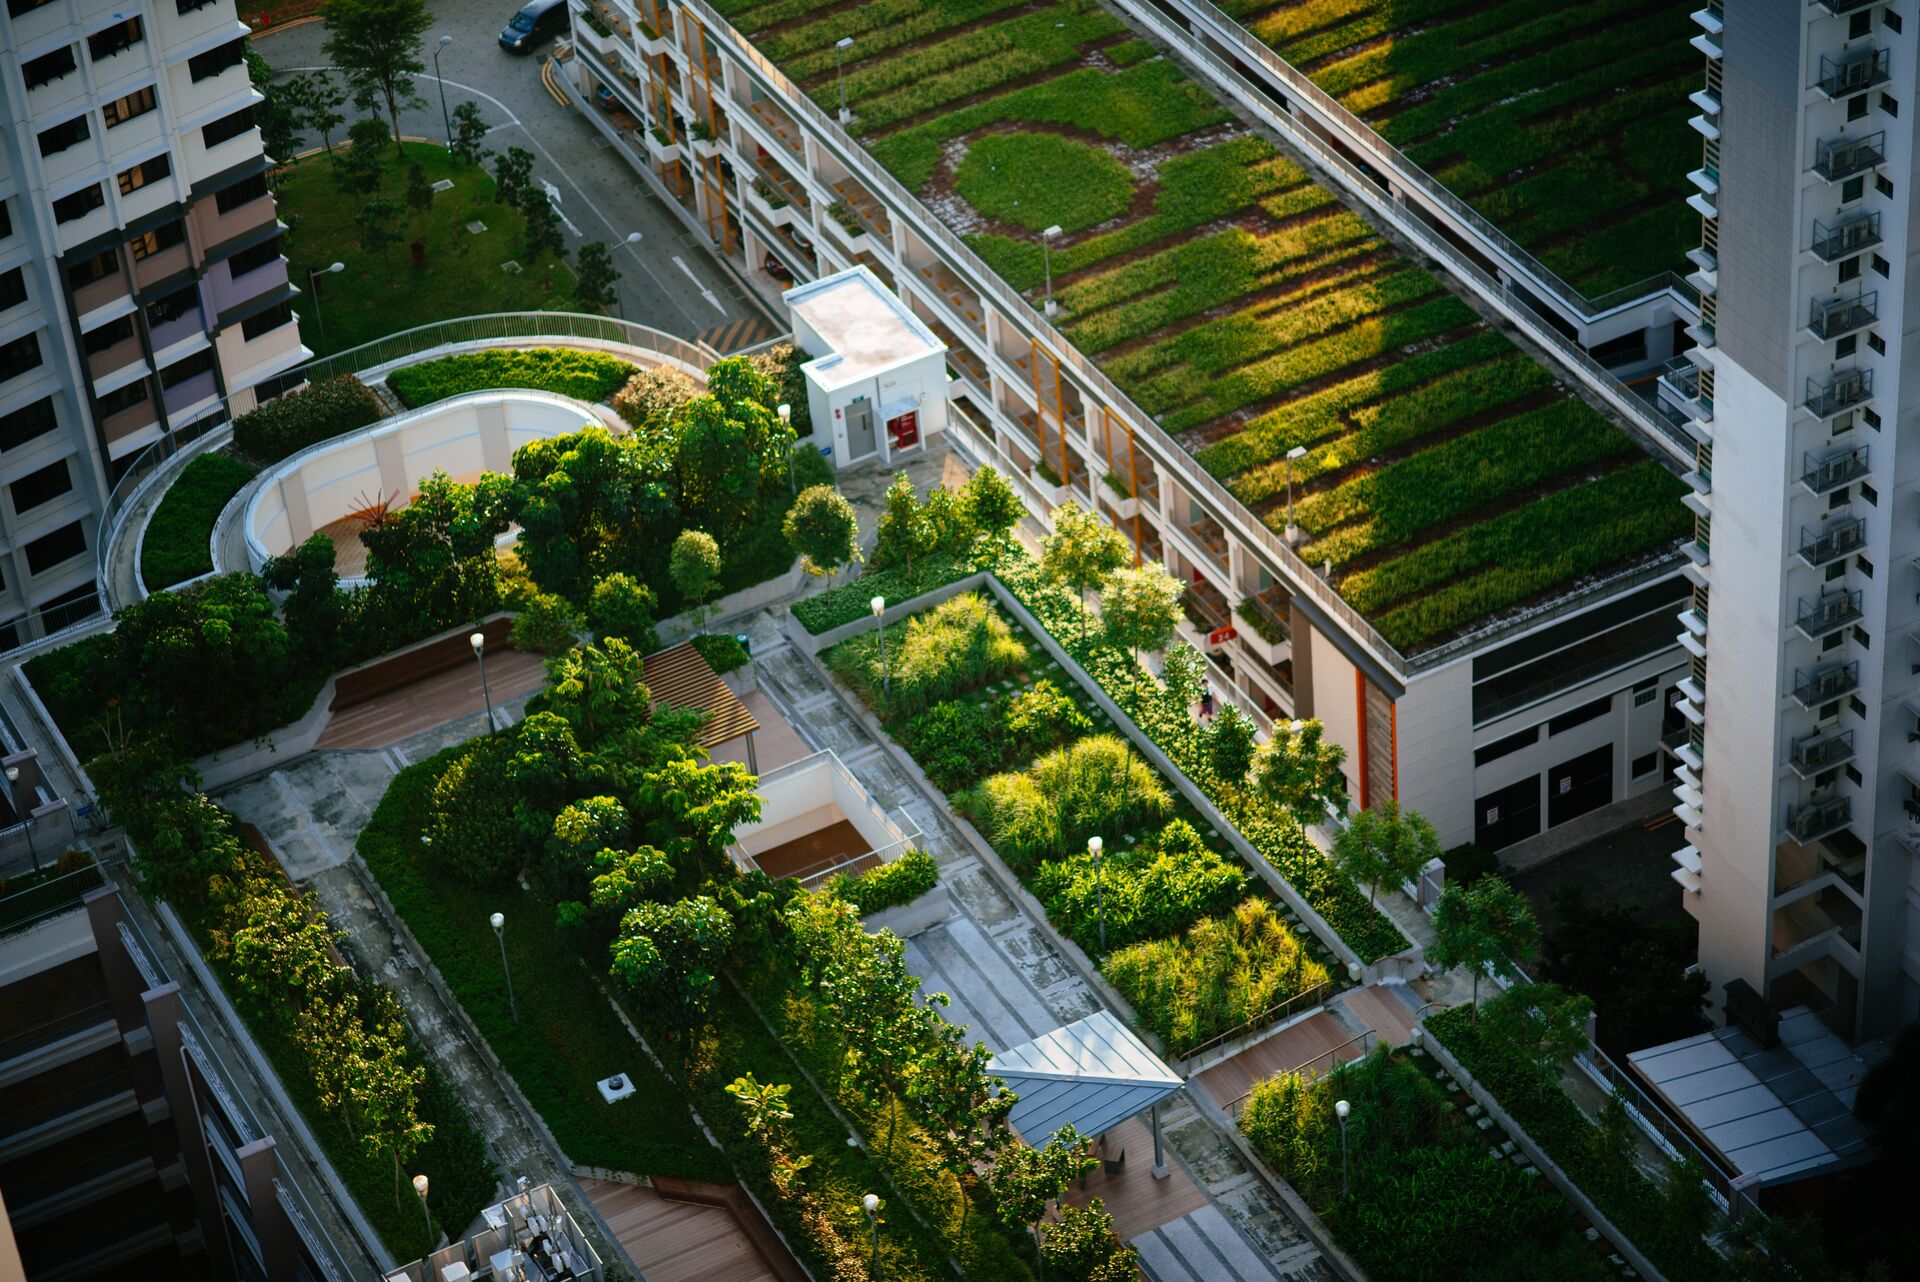 1920_Aspect_Ratio-CEN_Sustainability-Buildings-Green-Concrete-Trees 08.jpeg